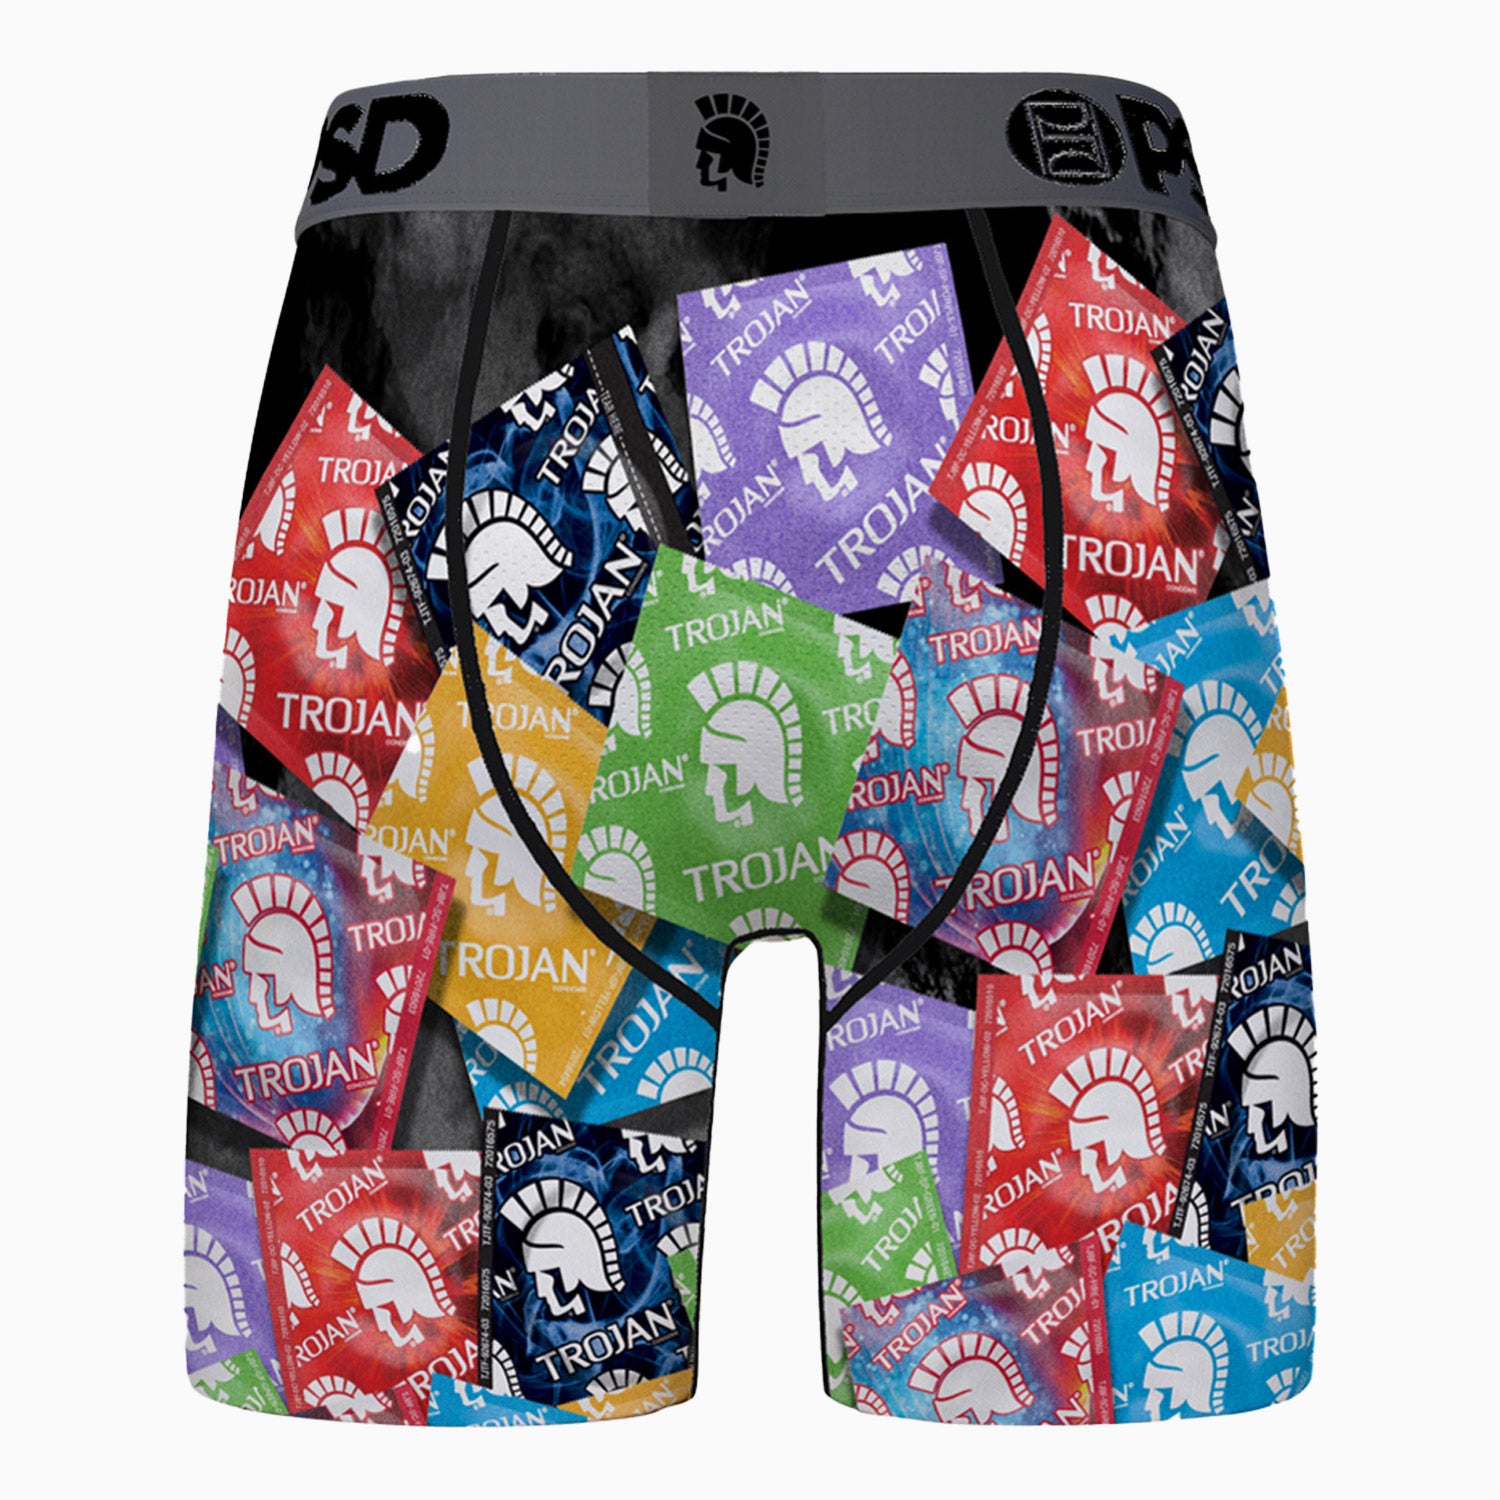 psd-underwear-mens-trojan-packs-hp-boxer-323180015